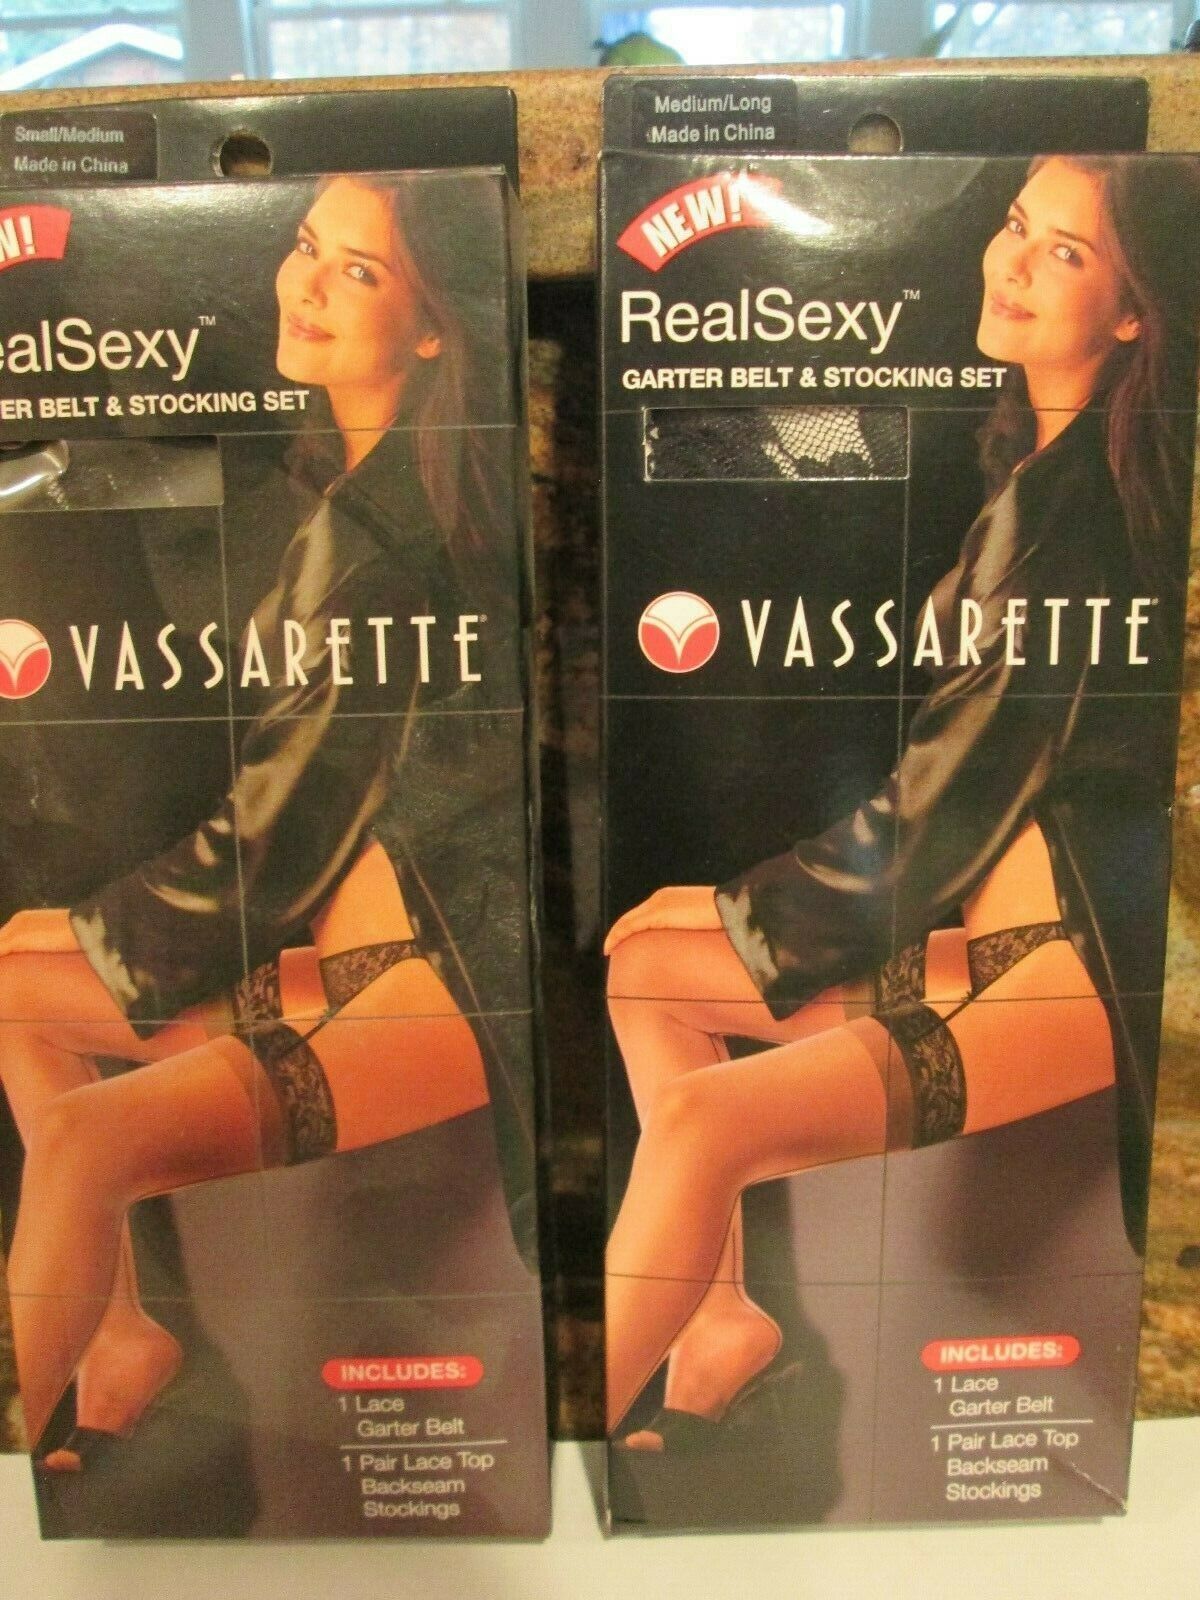 Vassarette Lace Garter Belt & Lace Top Backseam Stocking Set Size S-m And M-long